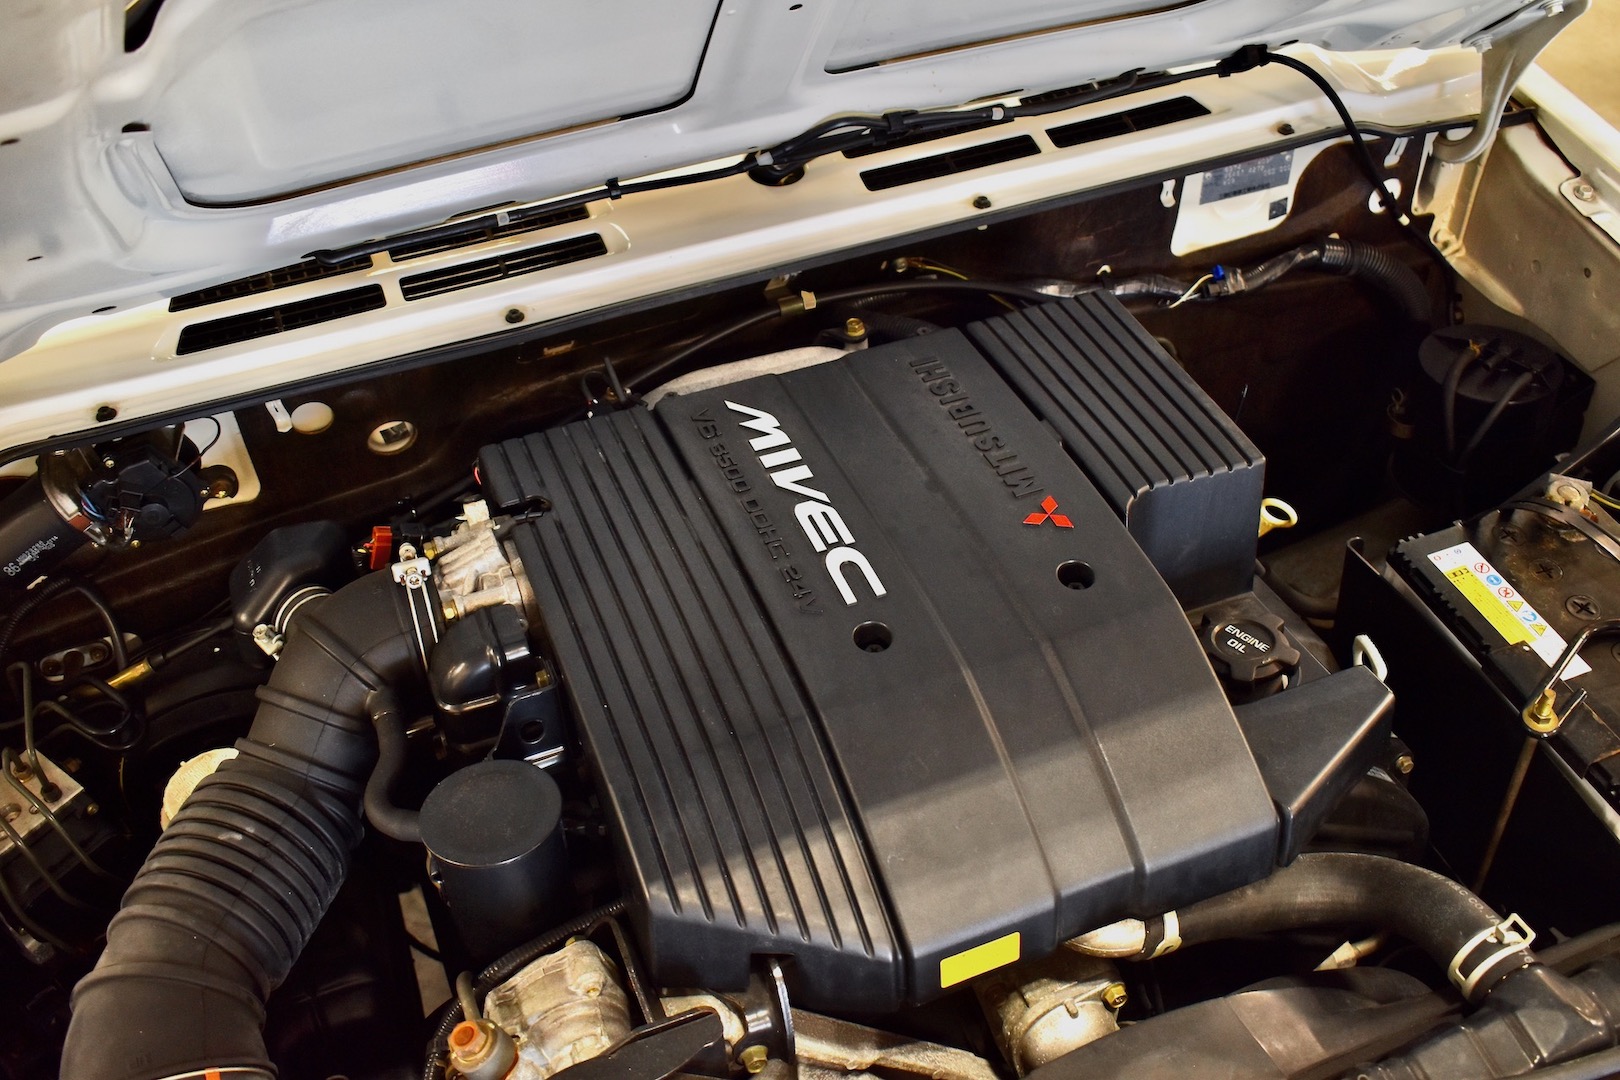 1997 Mitsubishi Pajero Evolution engine